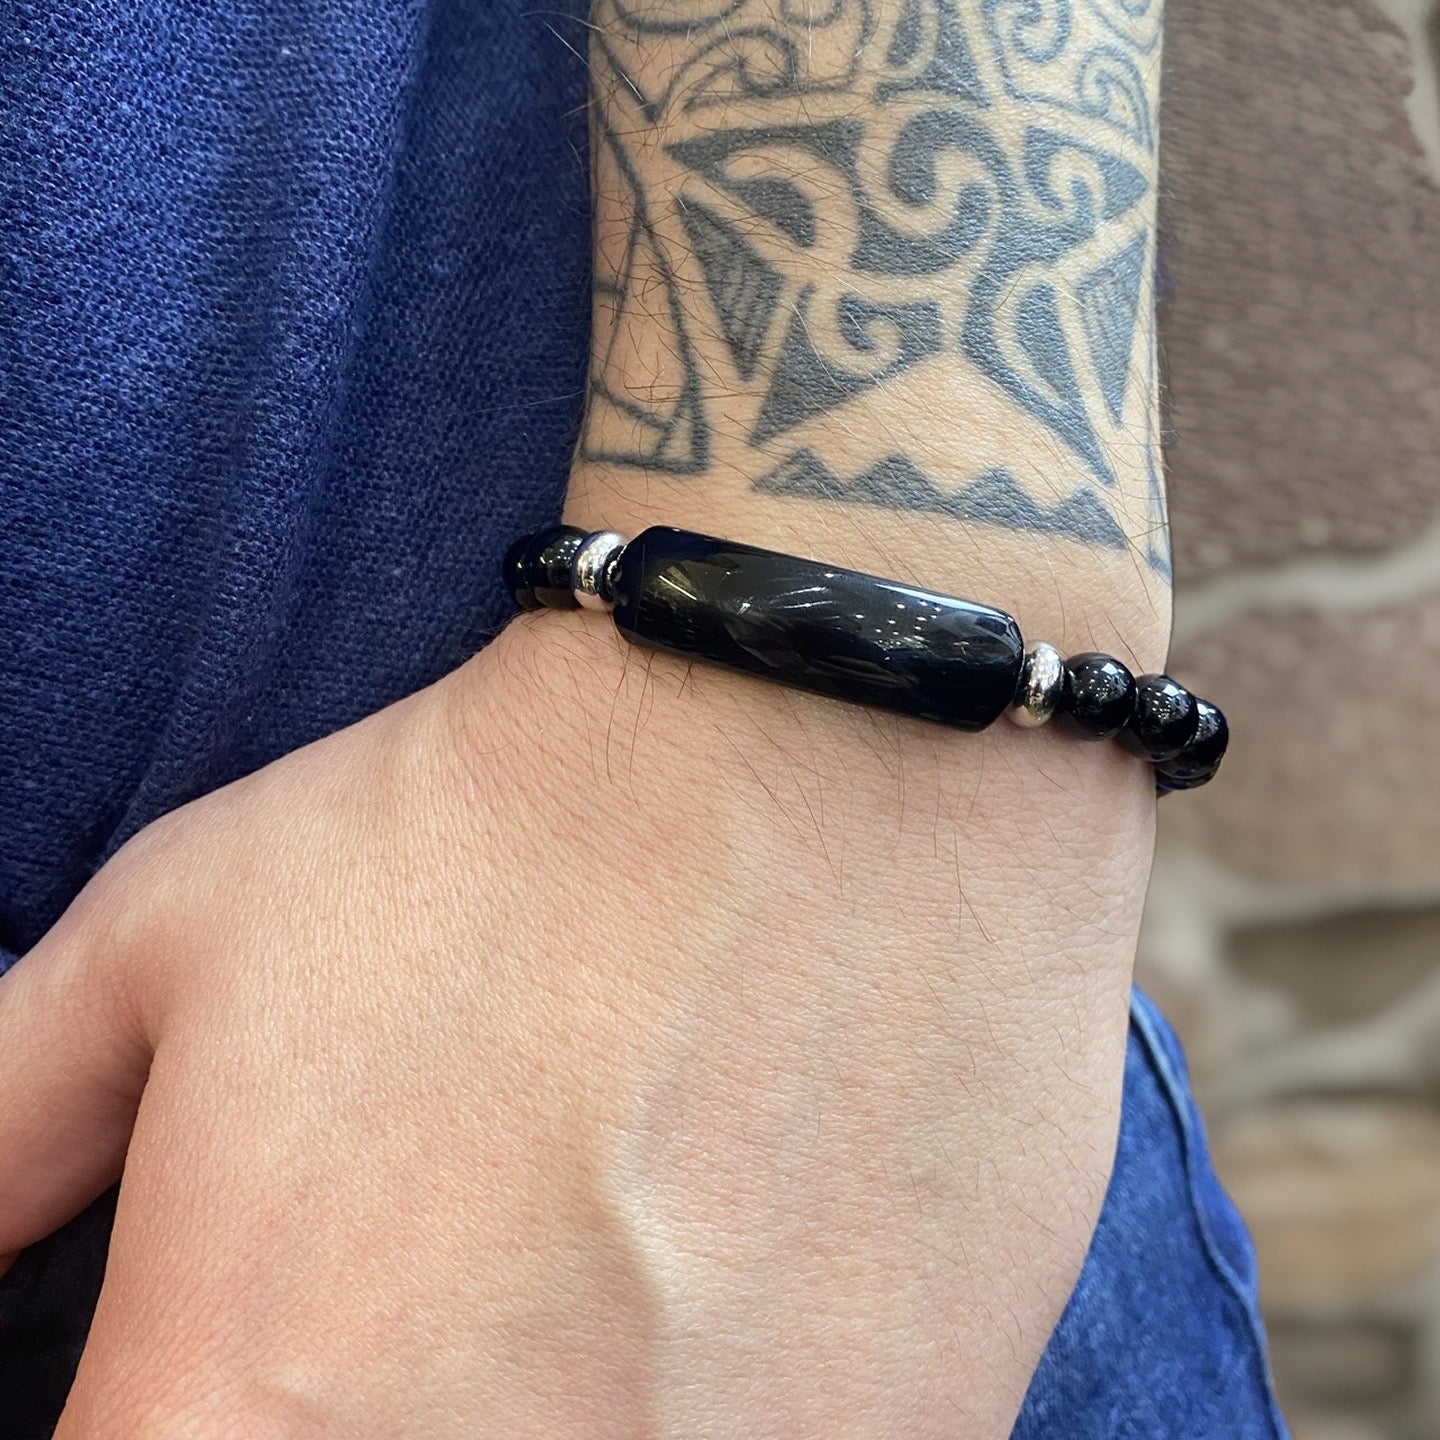 Beads Bracelets (Black Obsidian ) (8 mm)